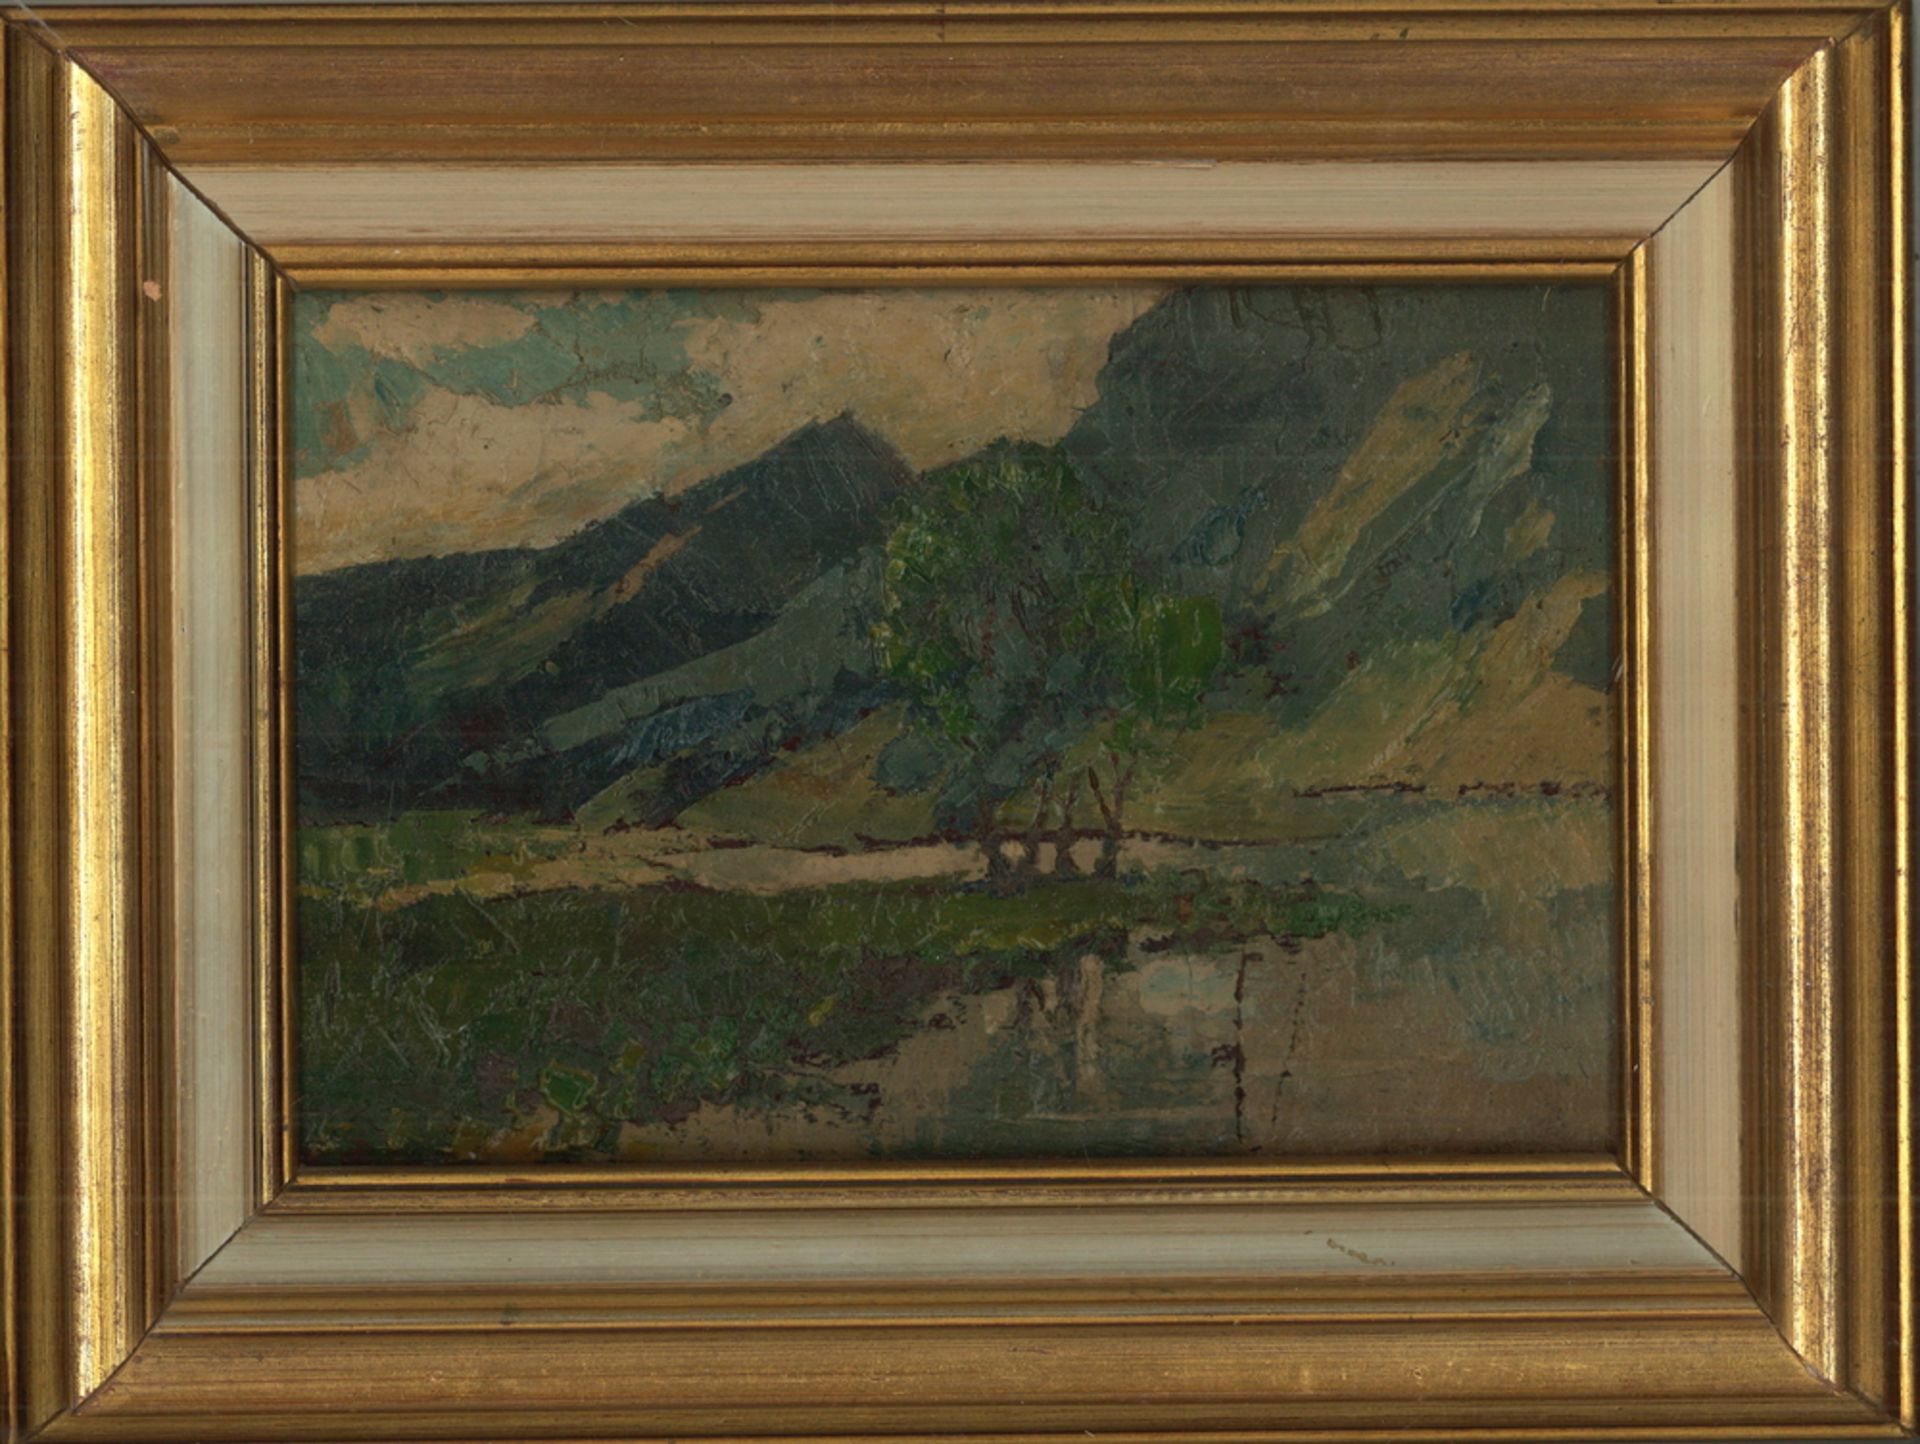 Karl HOLFELD (1921-2009) Ölgemälde auf Platte "Alpine Landschaft" im goldenen Rahmen. Maße: Höhe ca.